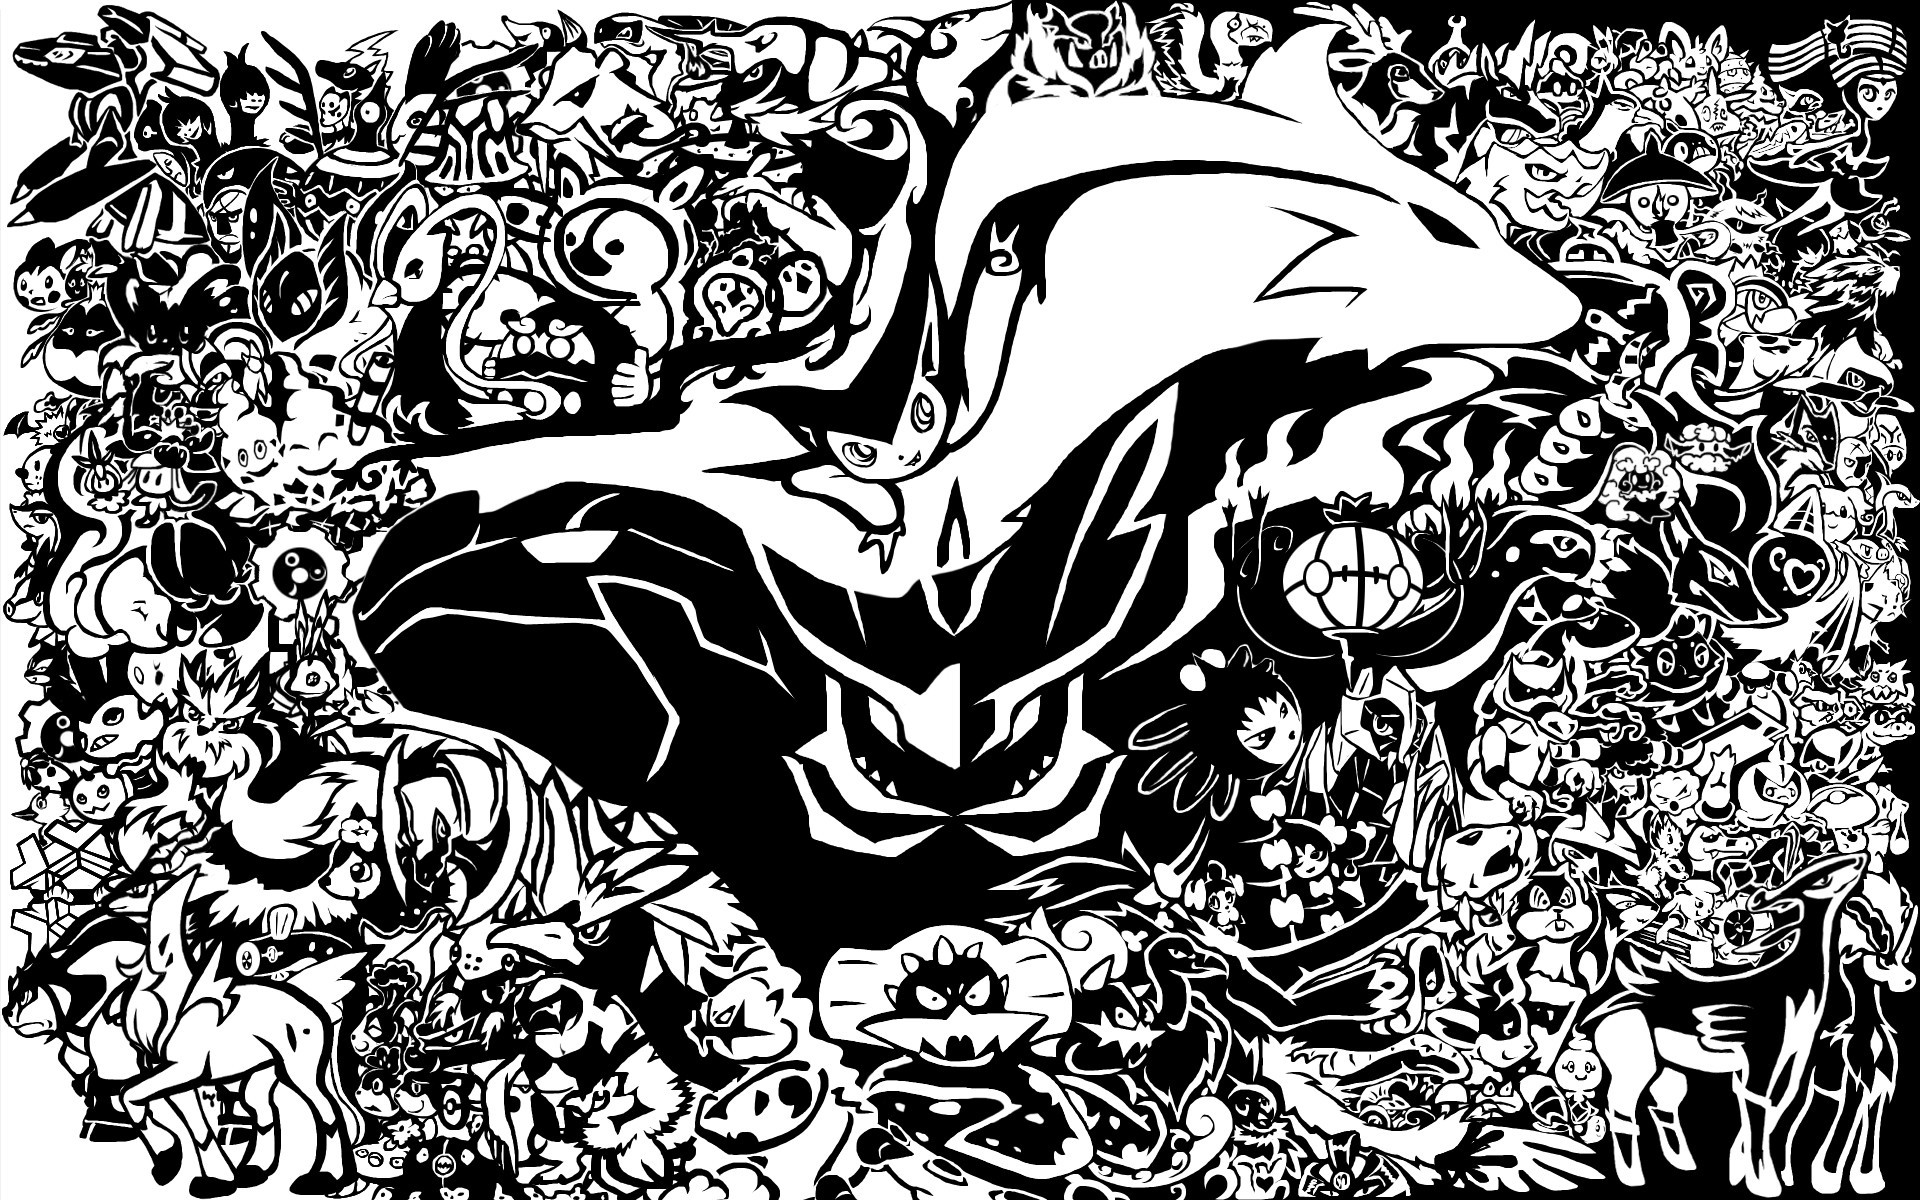 Pokemon Black and White Wallpaper 82 images